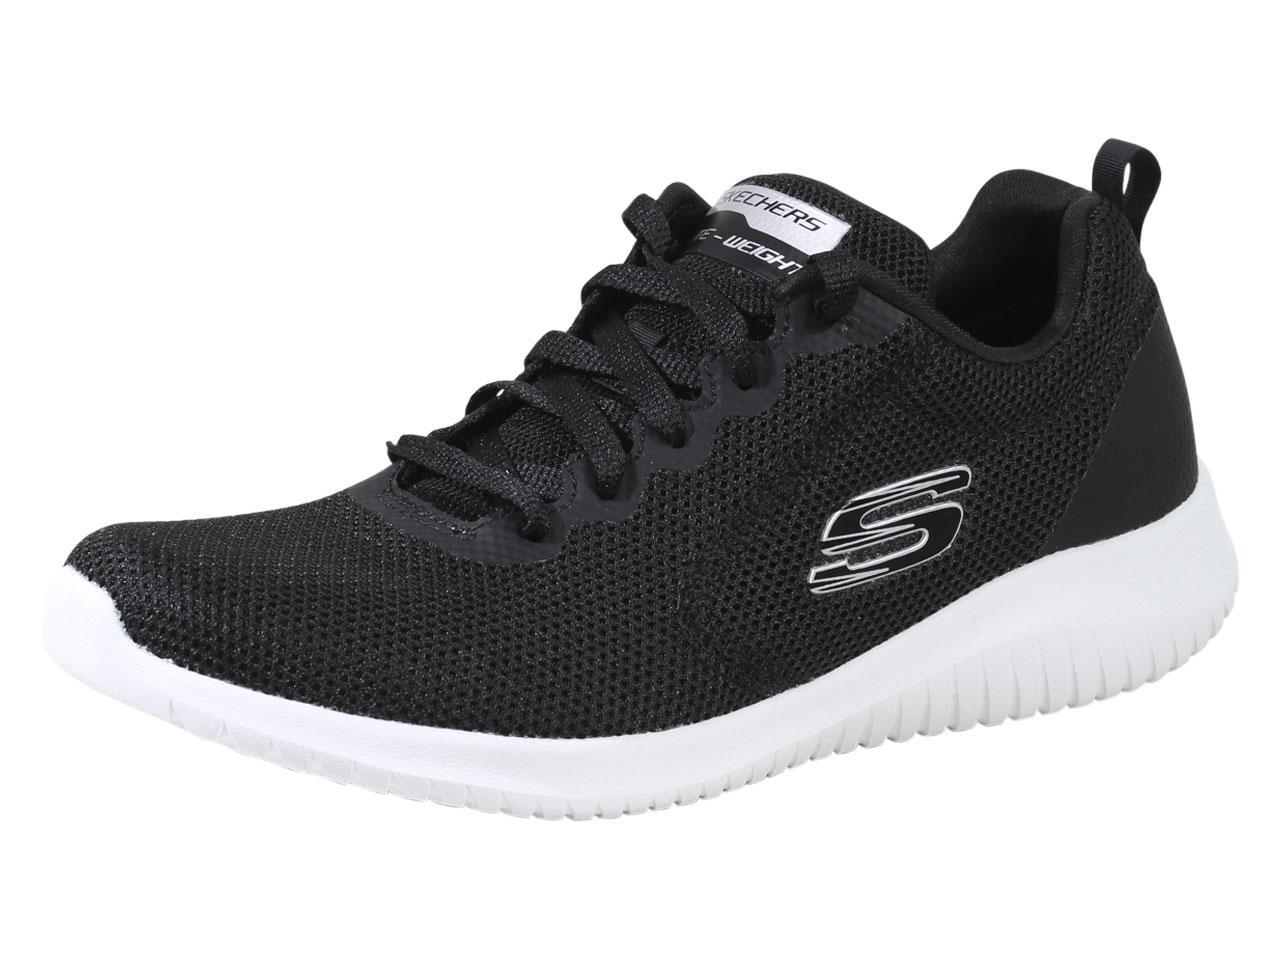 Skechers Women's Ultra Flex Free Spirits Memory Foam Sneakers Shoes - Black/White - 7.5 B(M) US